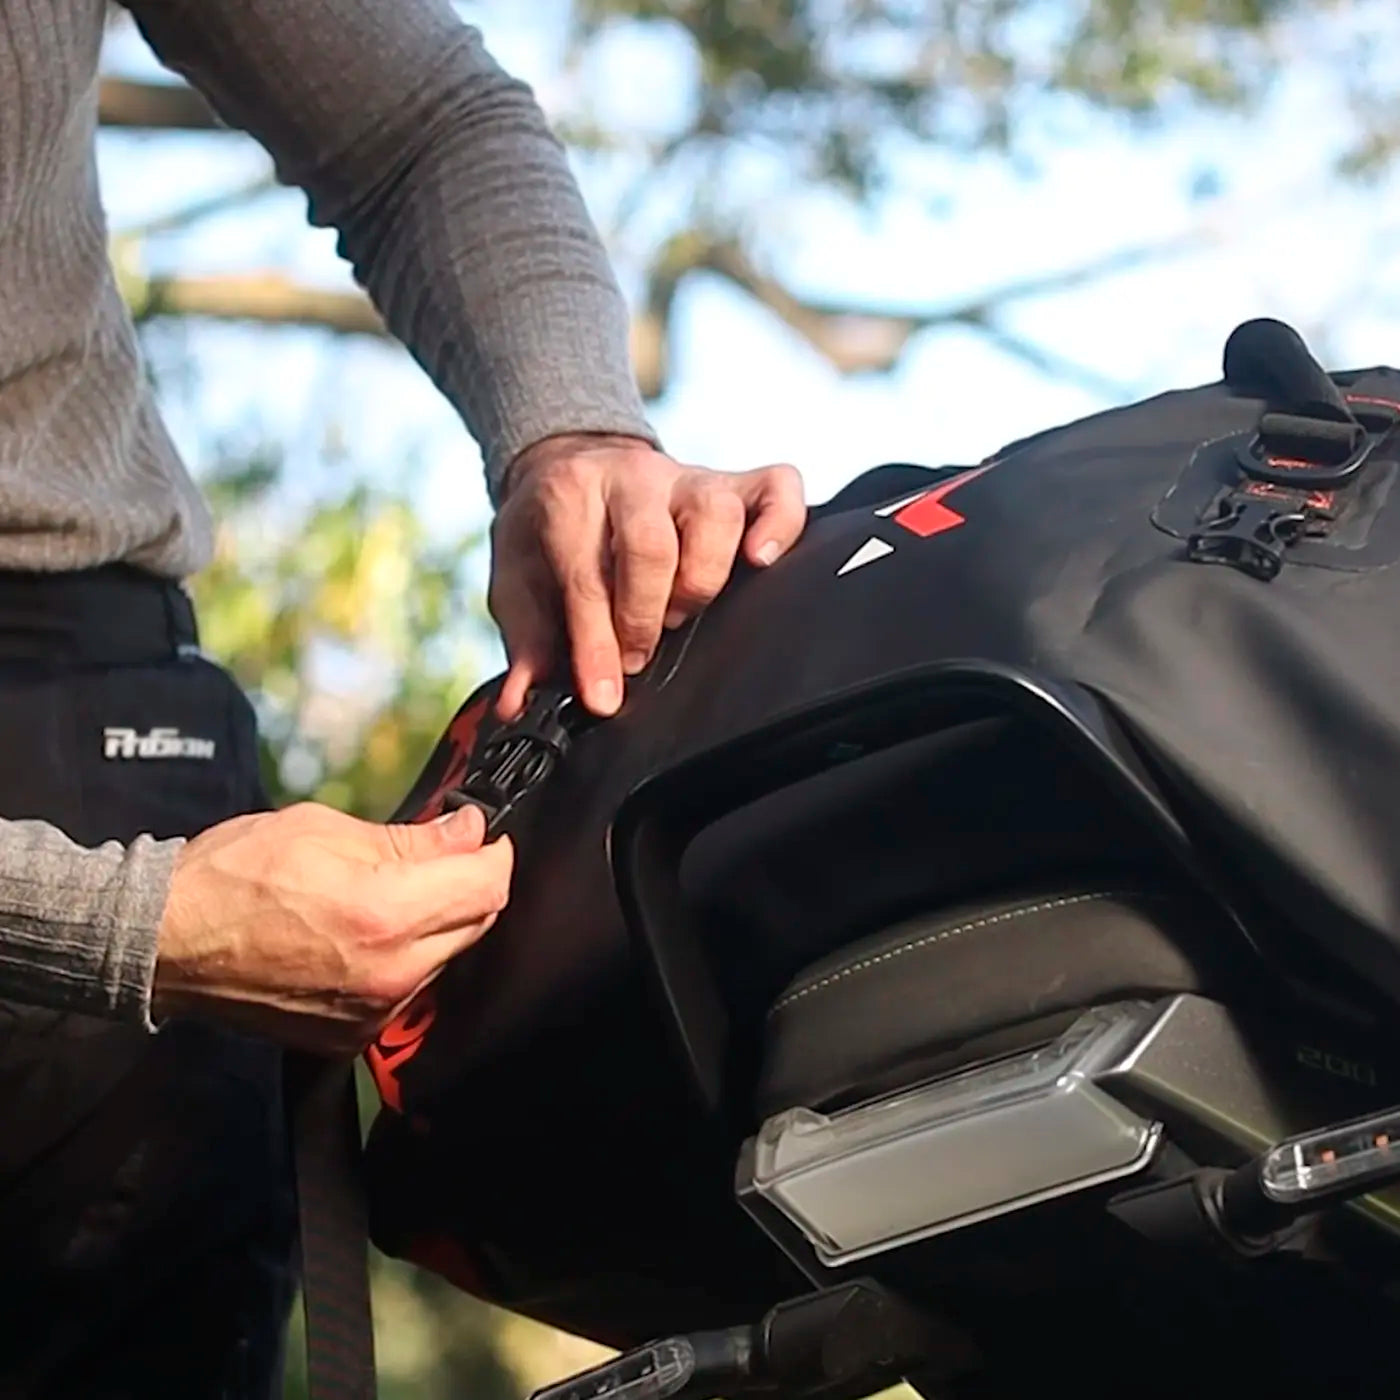 Step 1 - Kronox Duffel Bag install in your motorcycle